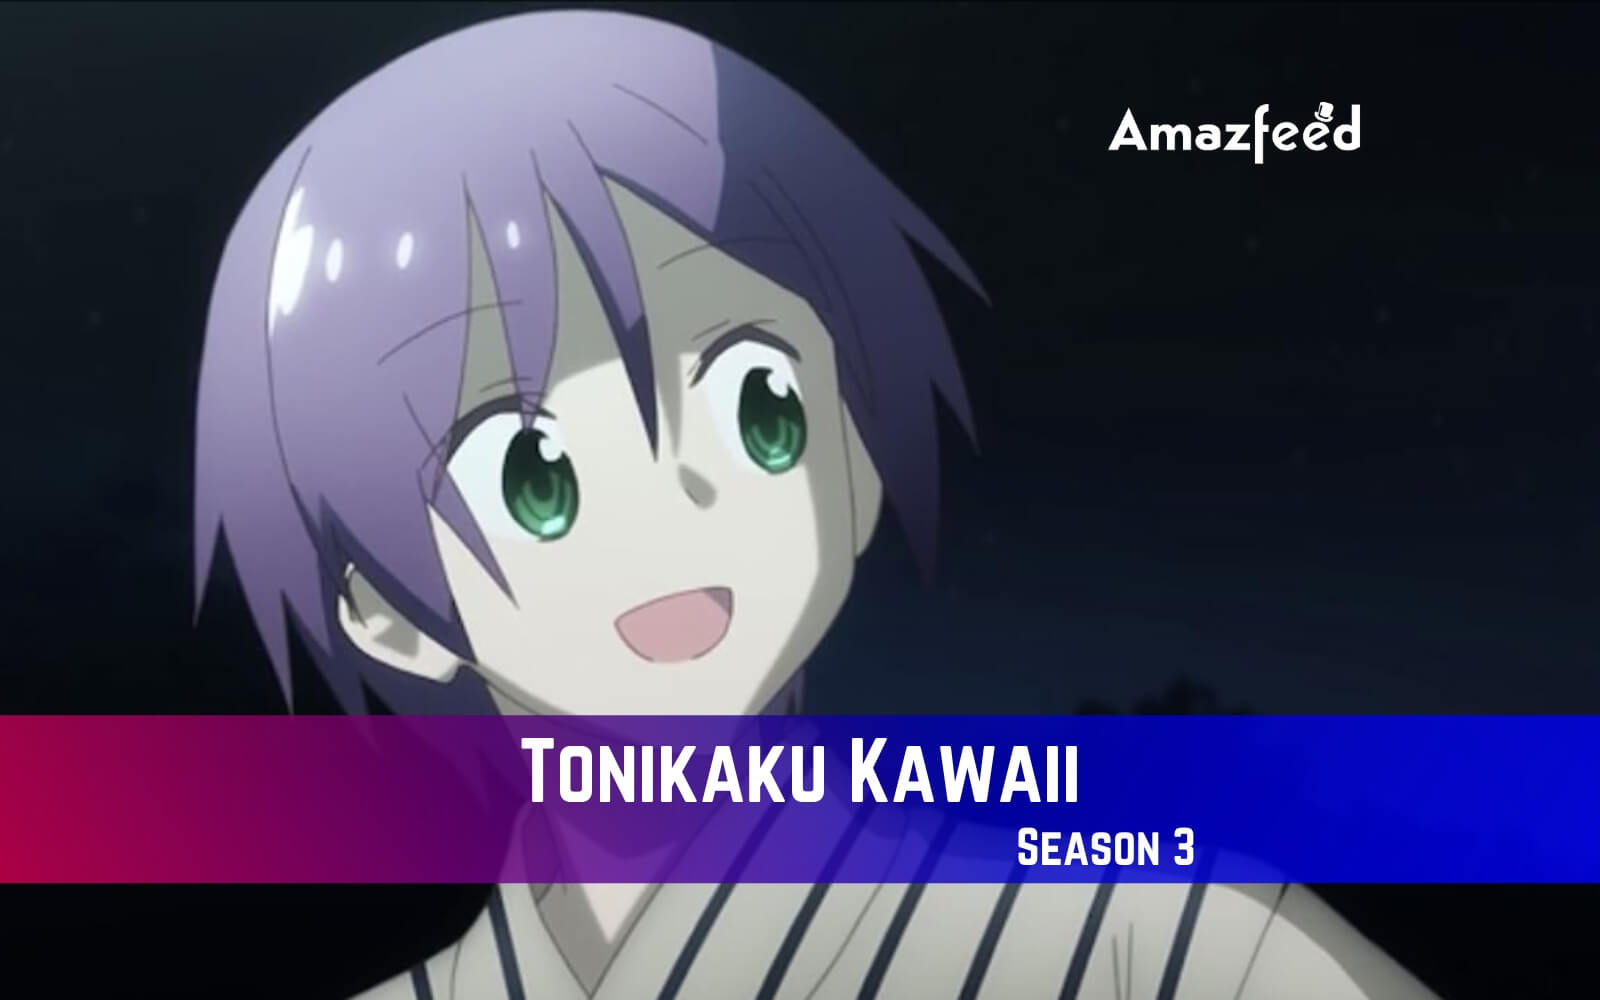 Tonikaku Kawaii Special Episode Postponed to Fall 2022, New Visual Released